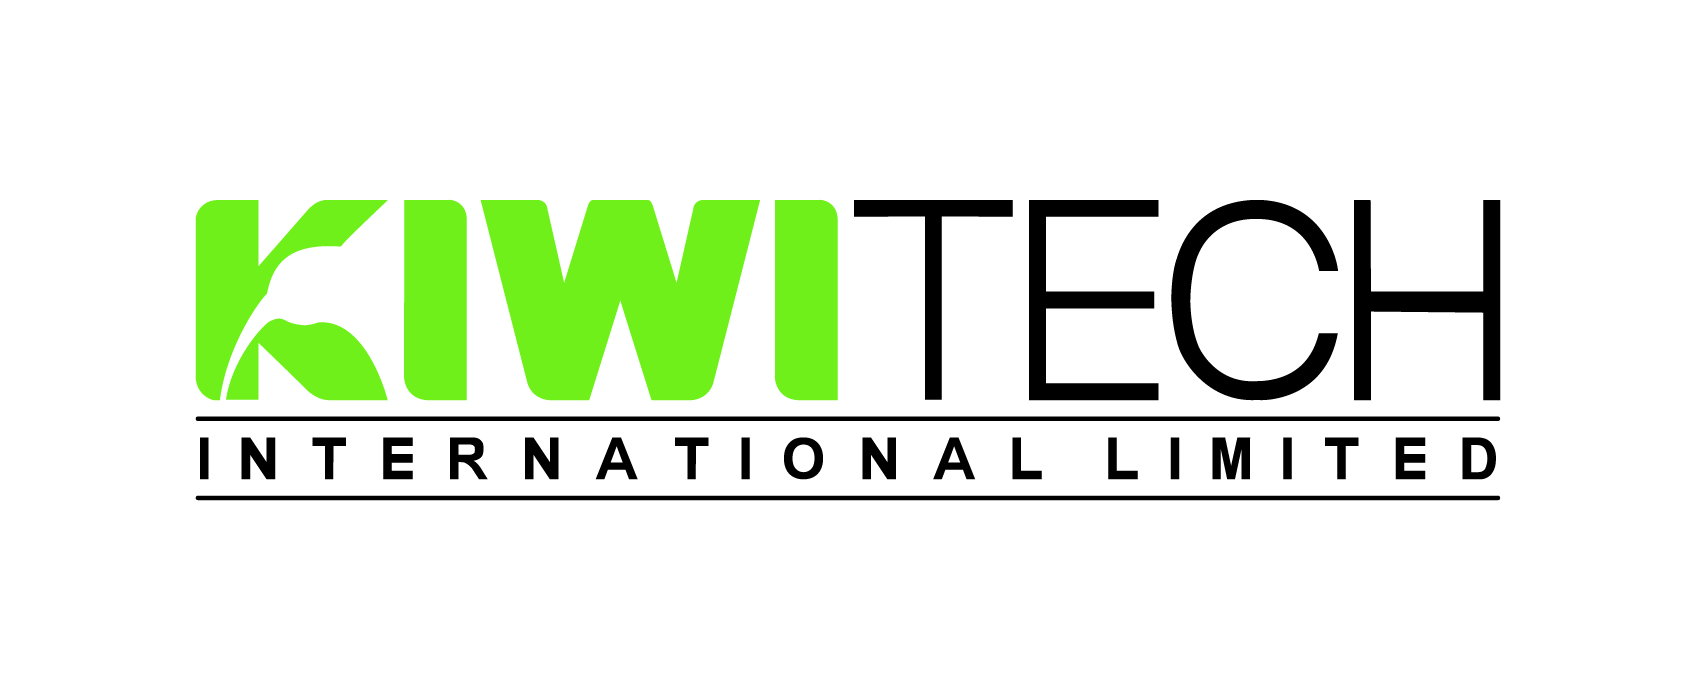 KiwiTech